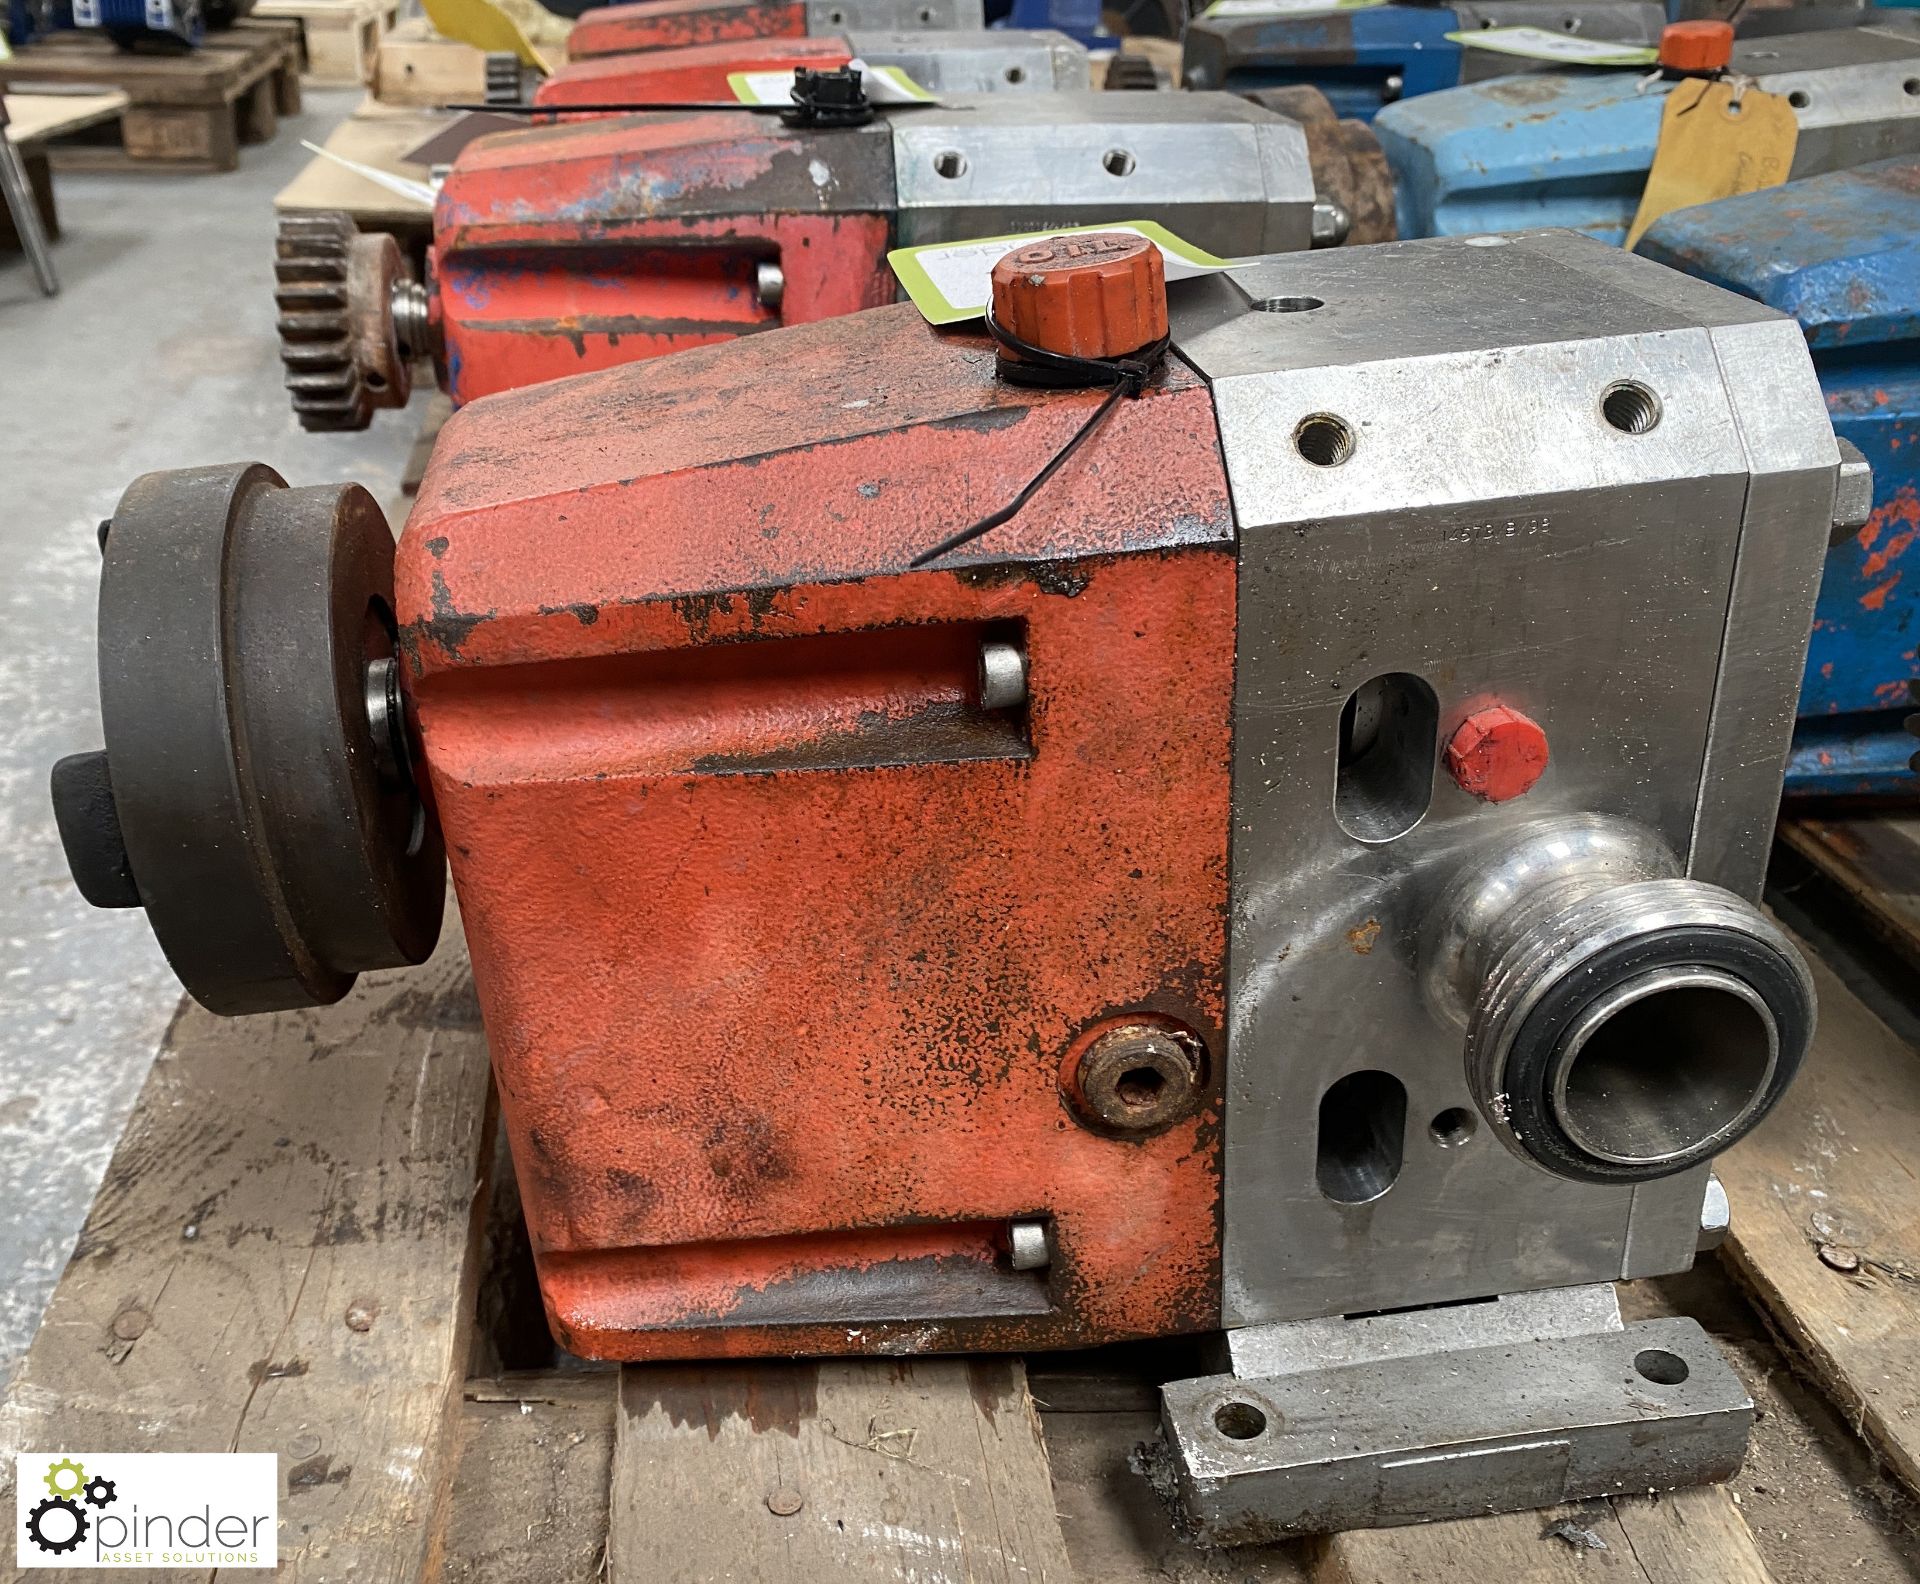 Johnson Pump 2/0017 stainless steel Lobe Pump, serial number C012451 (Location Carlisle Site 1) - Image 2 of 4